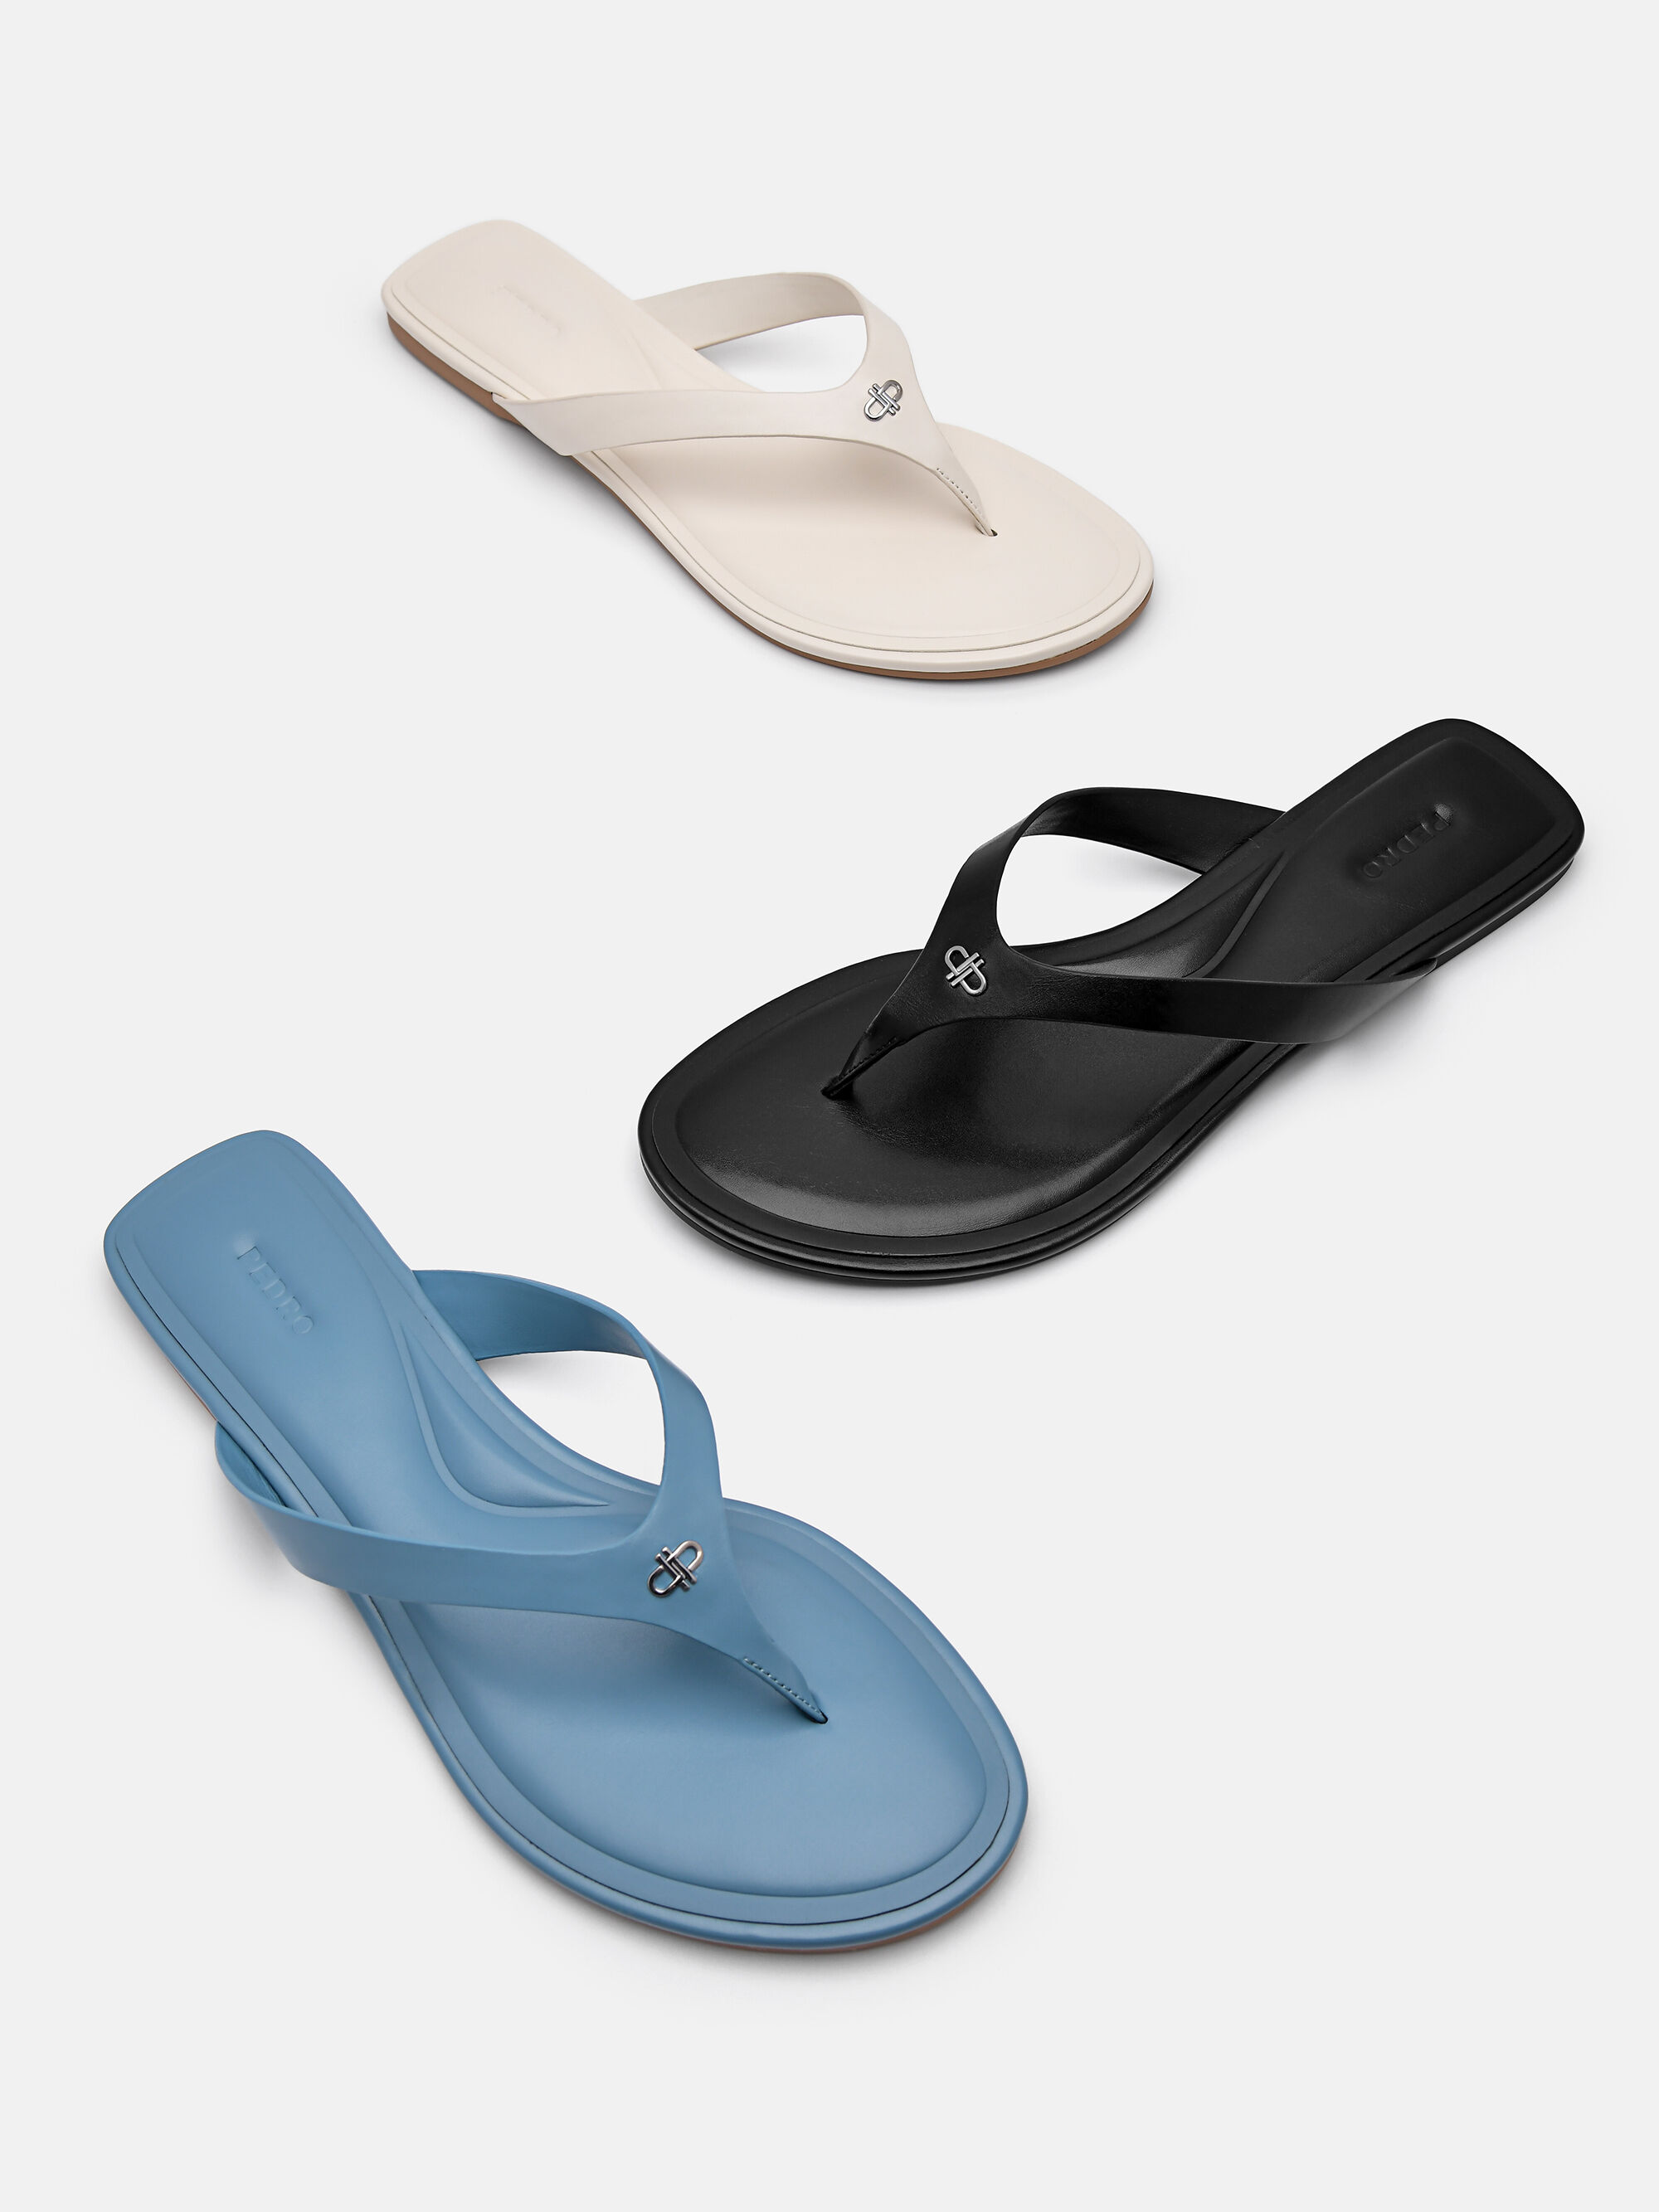 PEDRO Icon Thong Sandals, Slate Blue